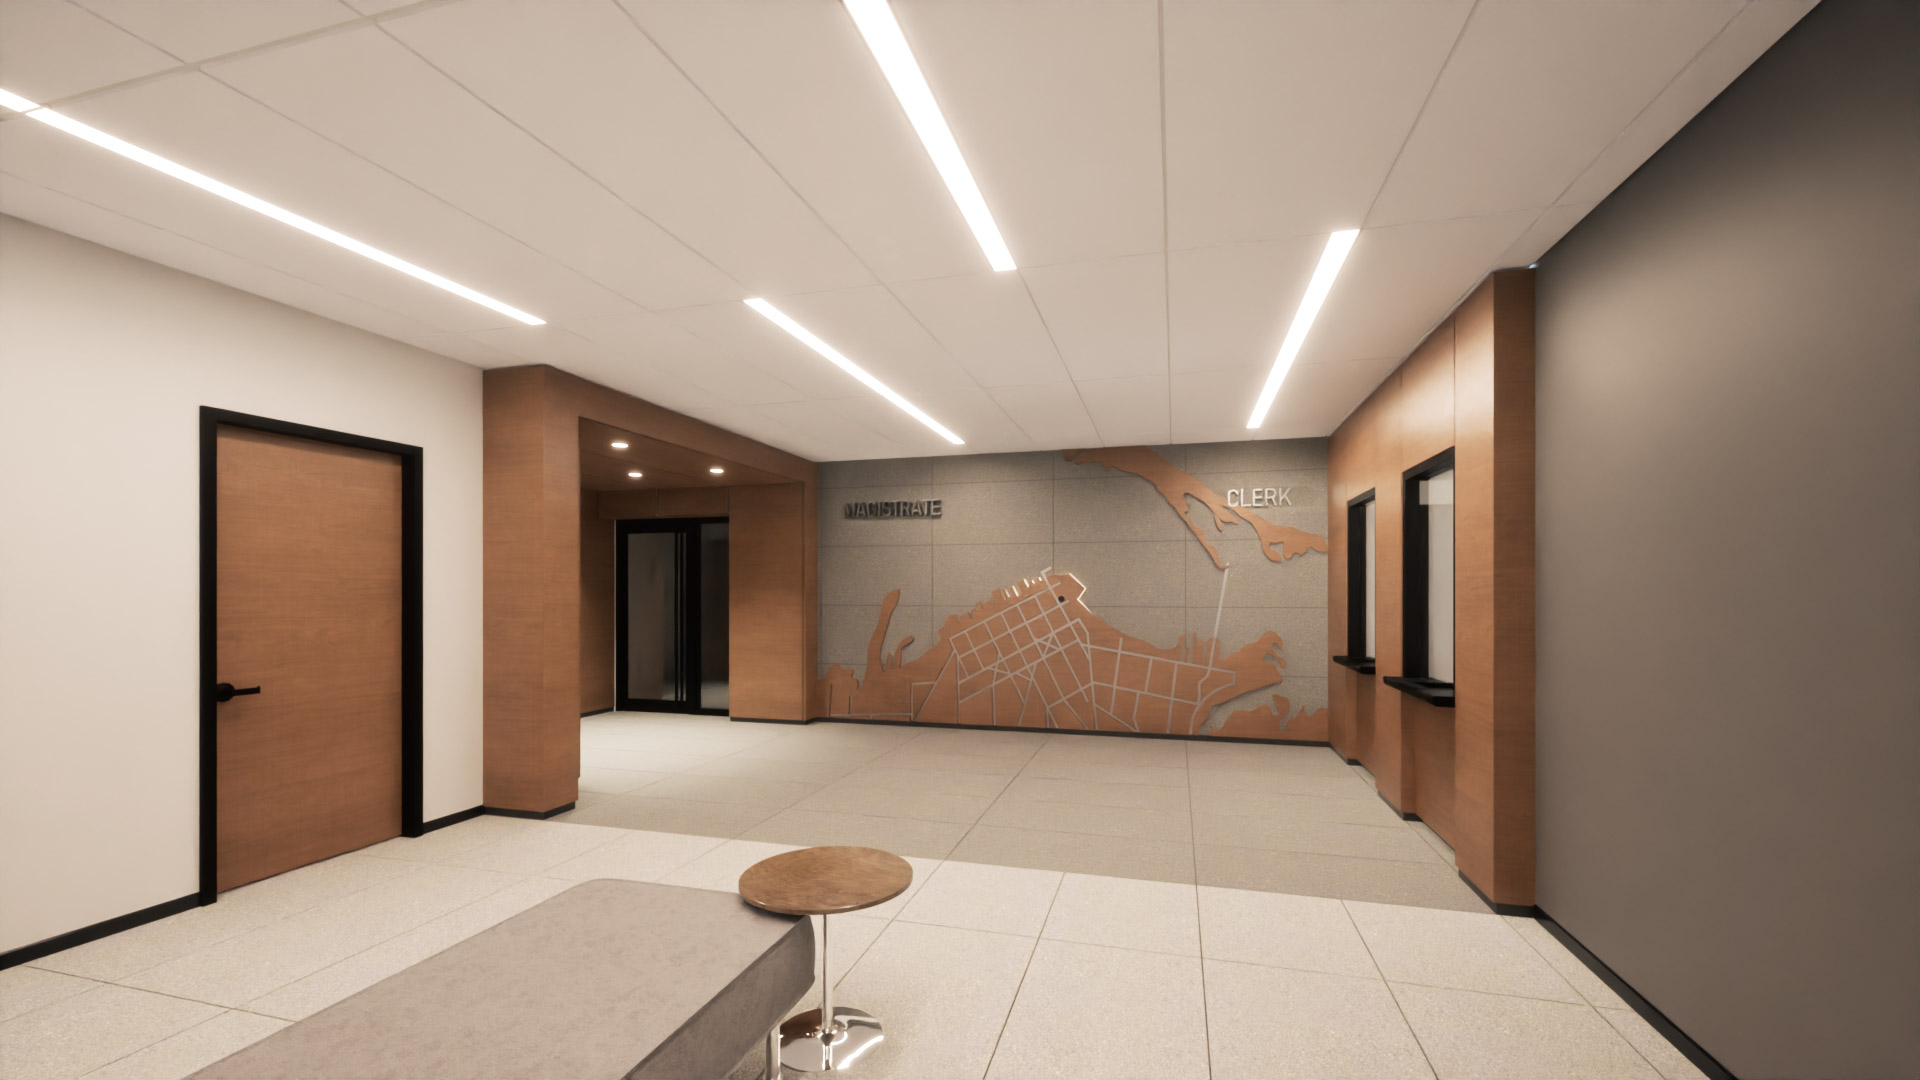 Interior rendering of justice center lobby